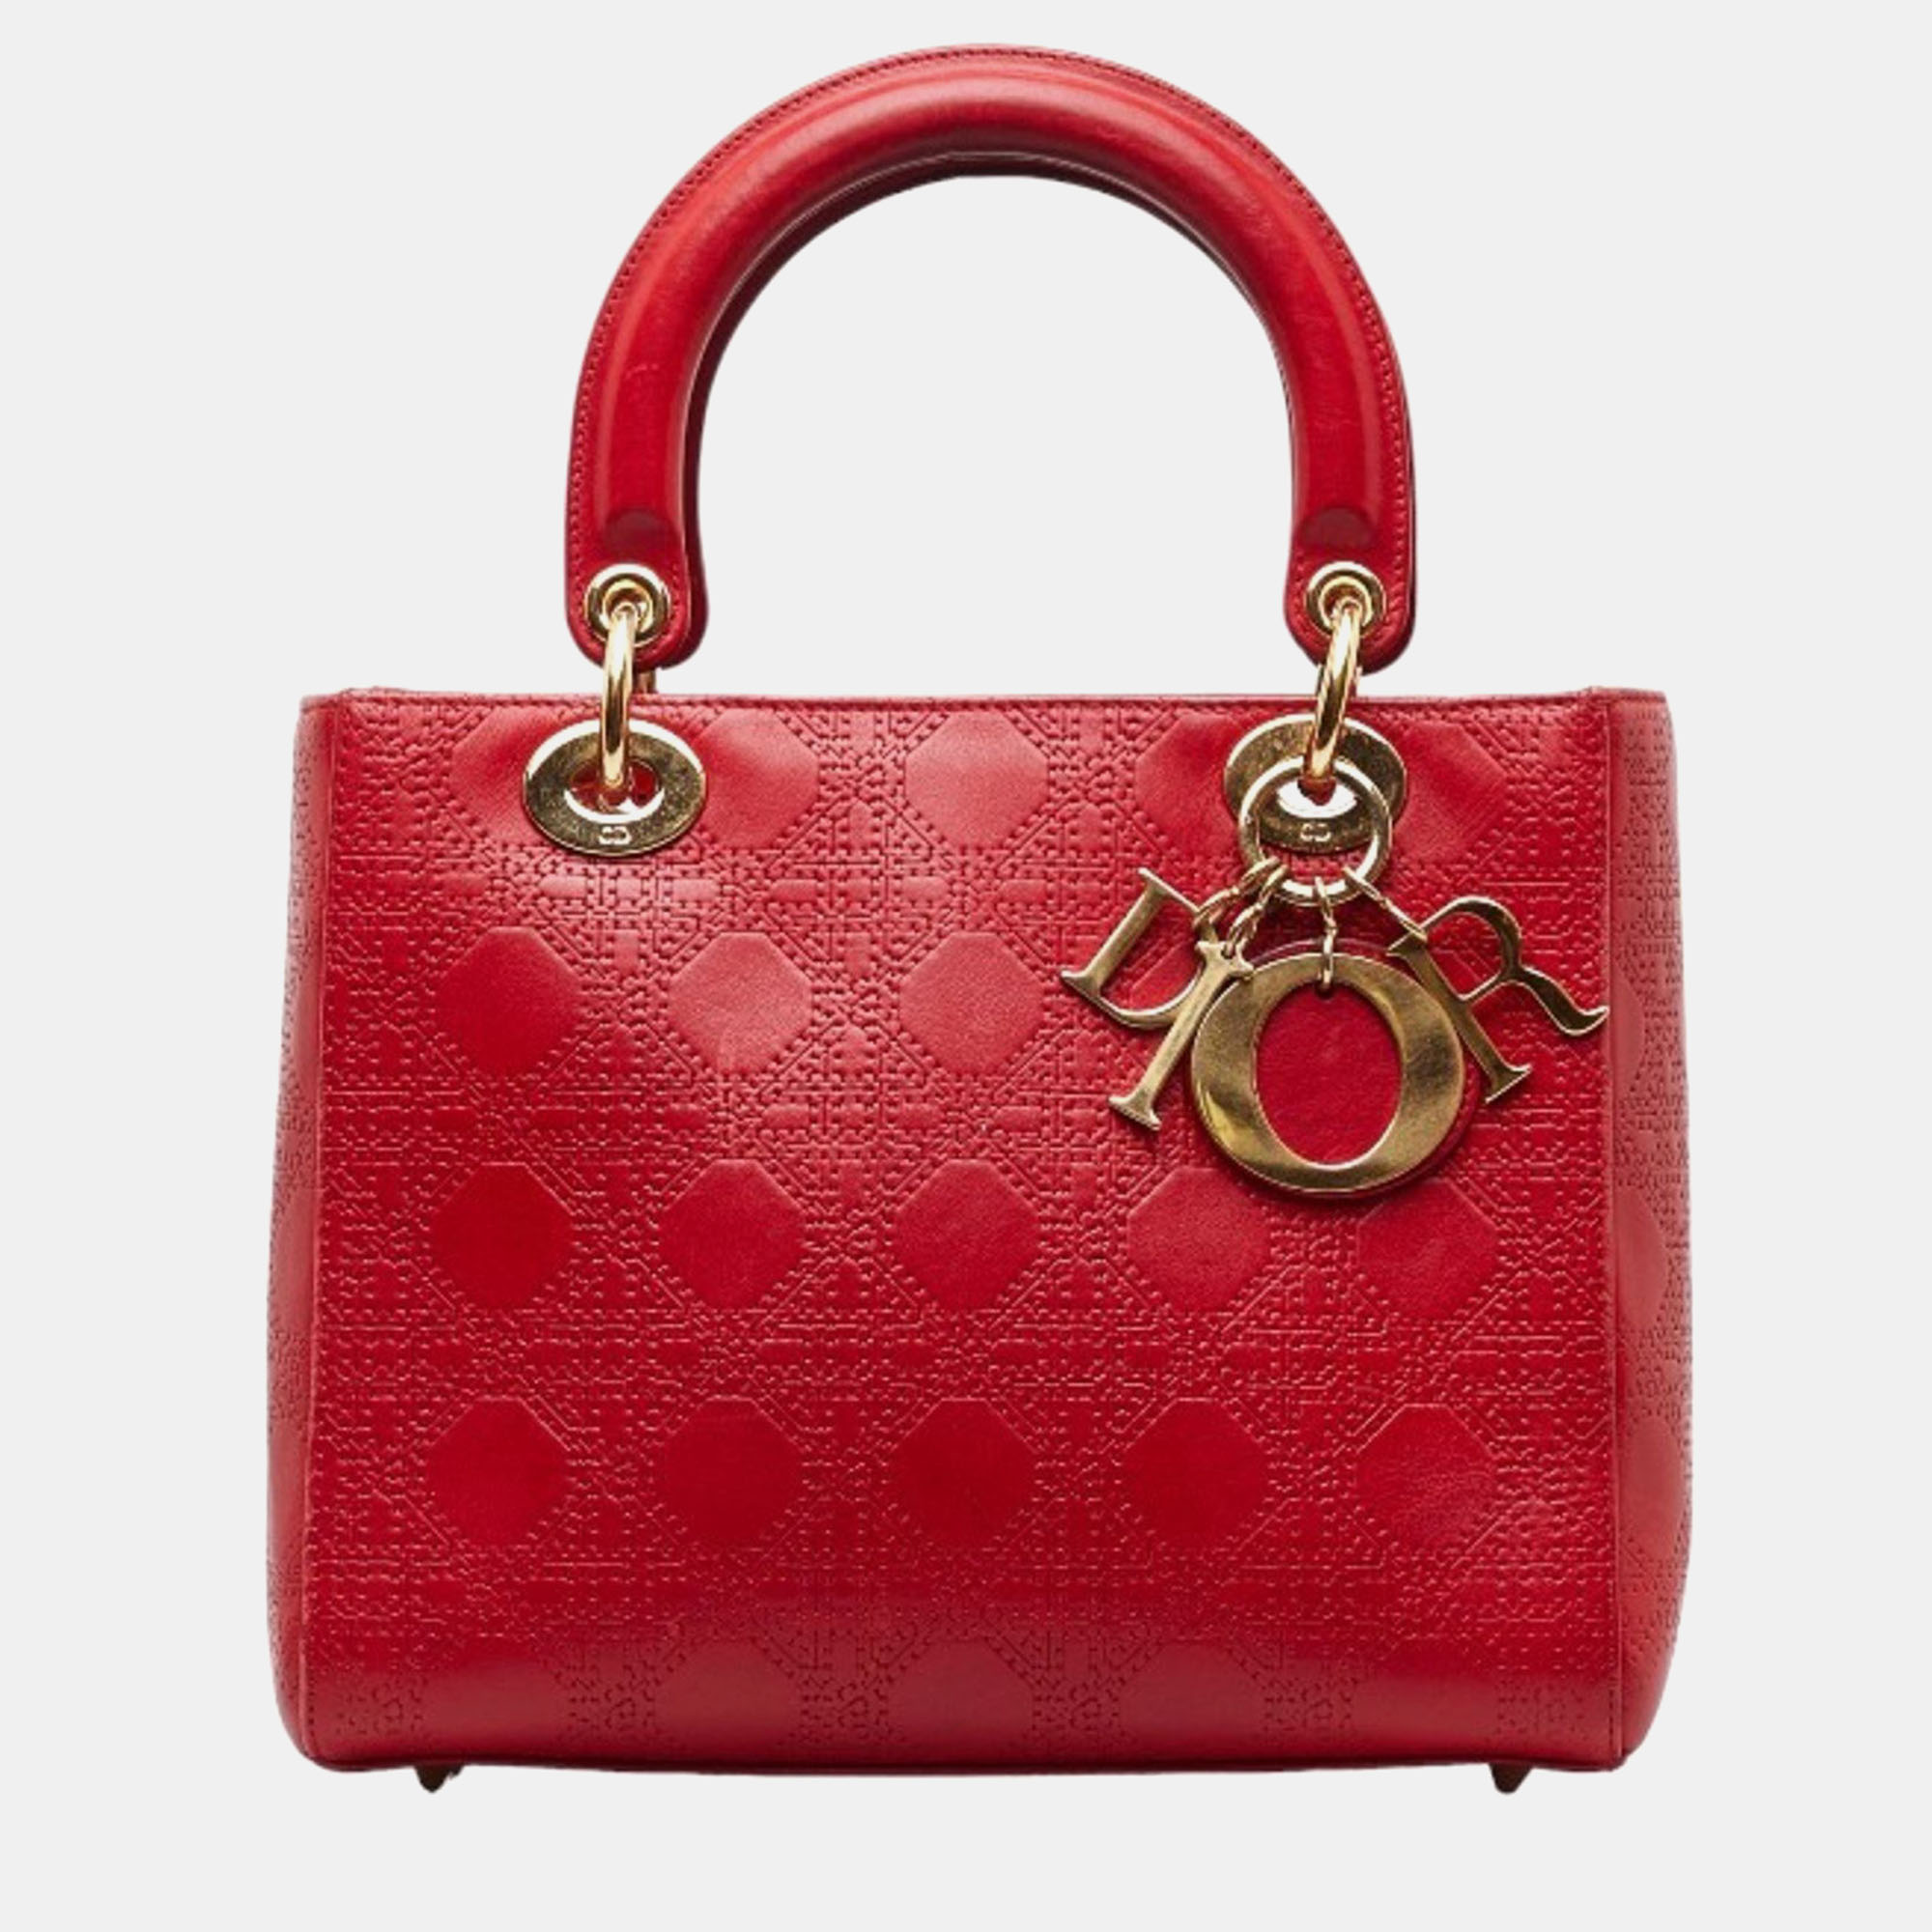 Dior red leather medium lady dior tote bag